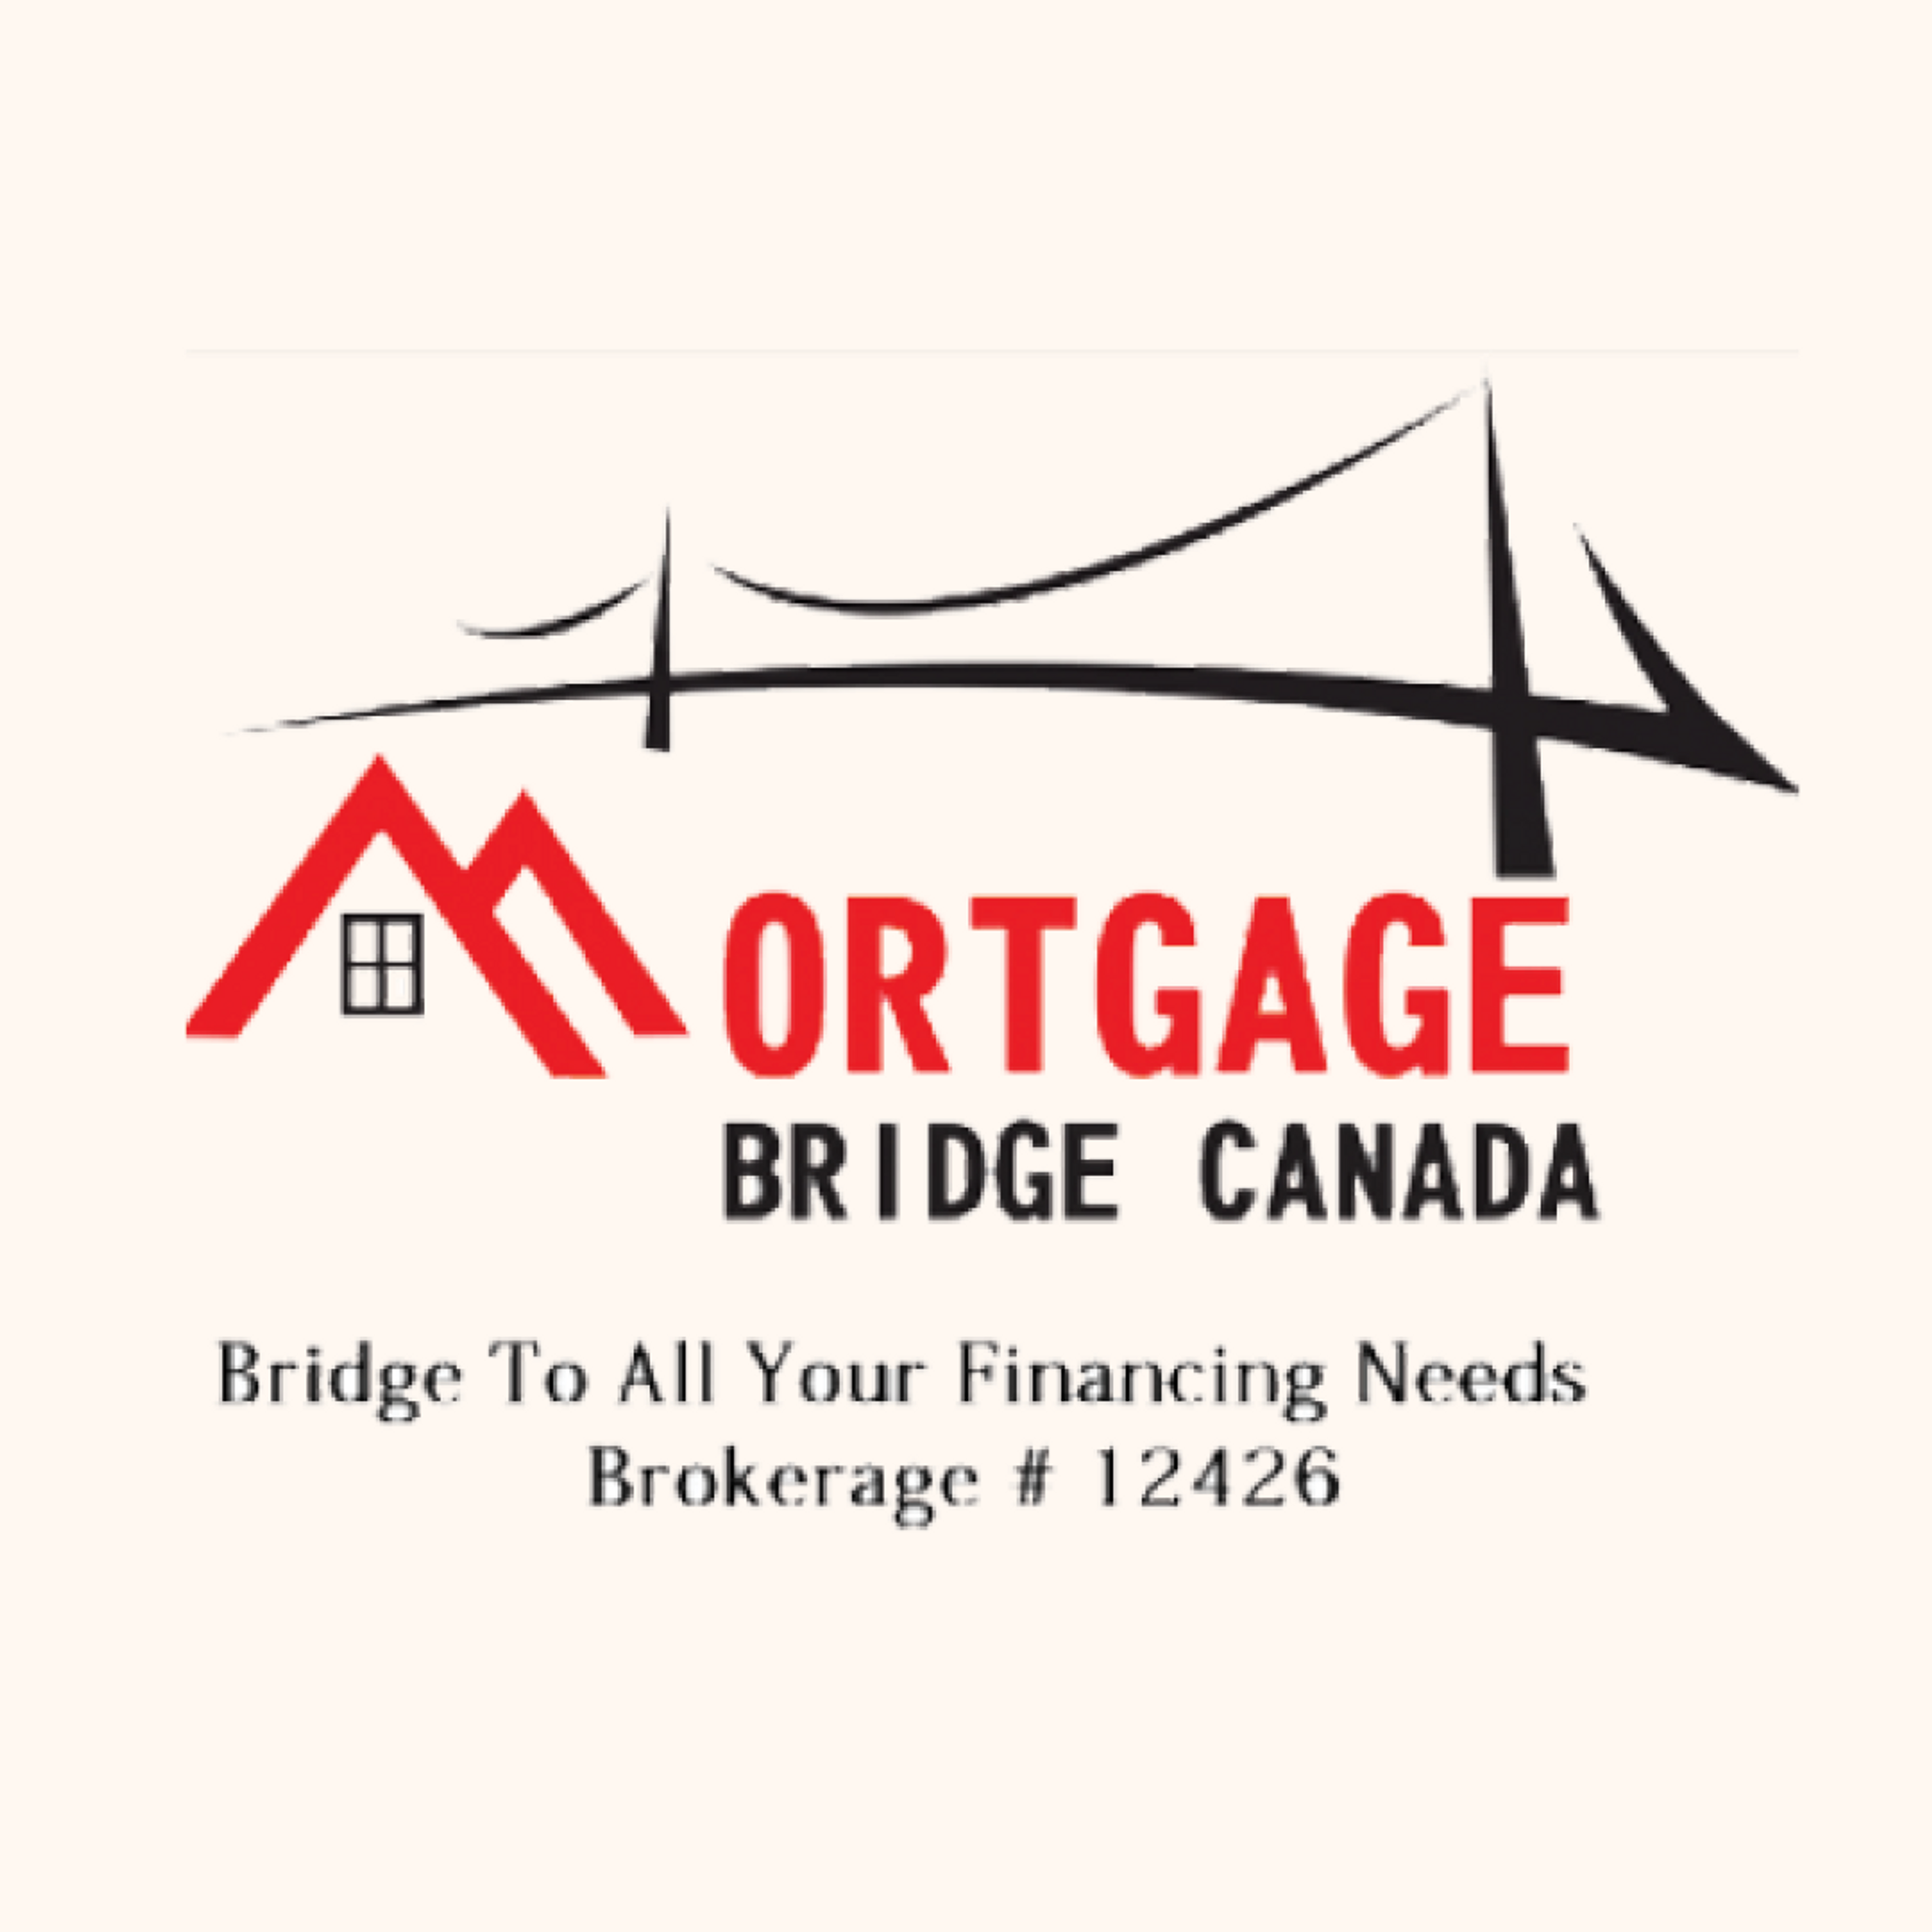 Mortgage Bridge